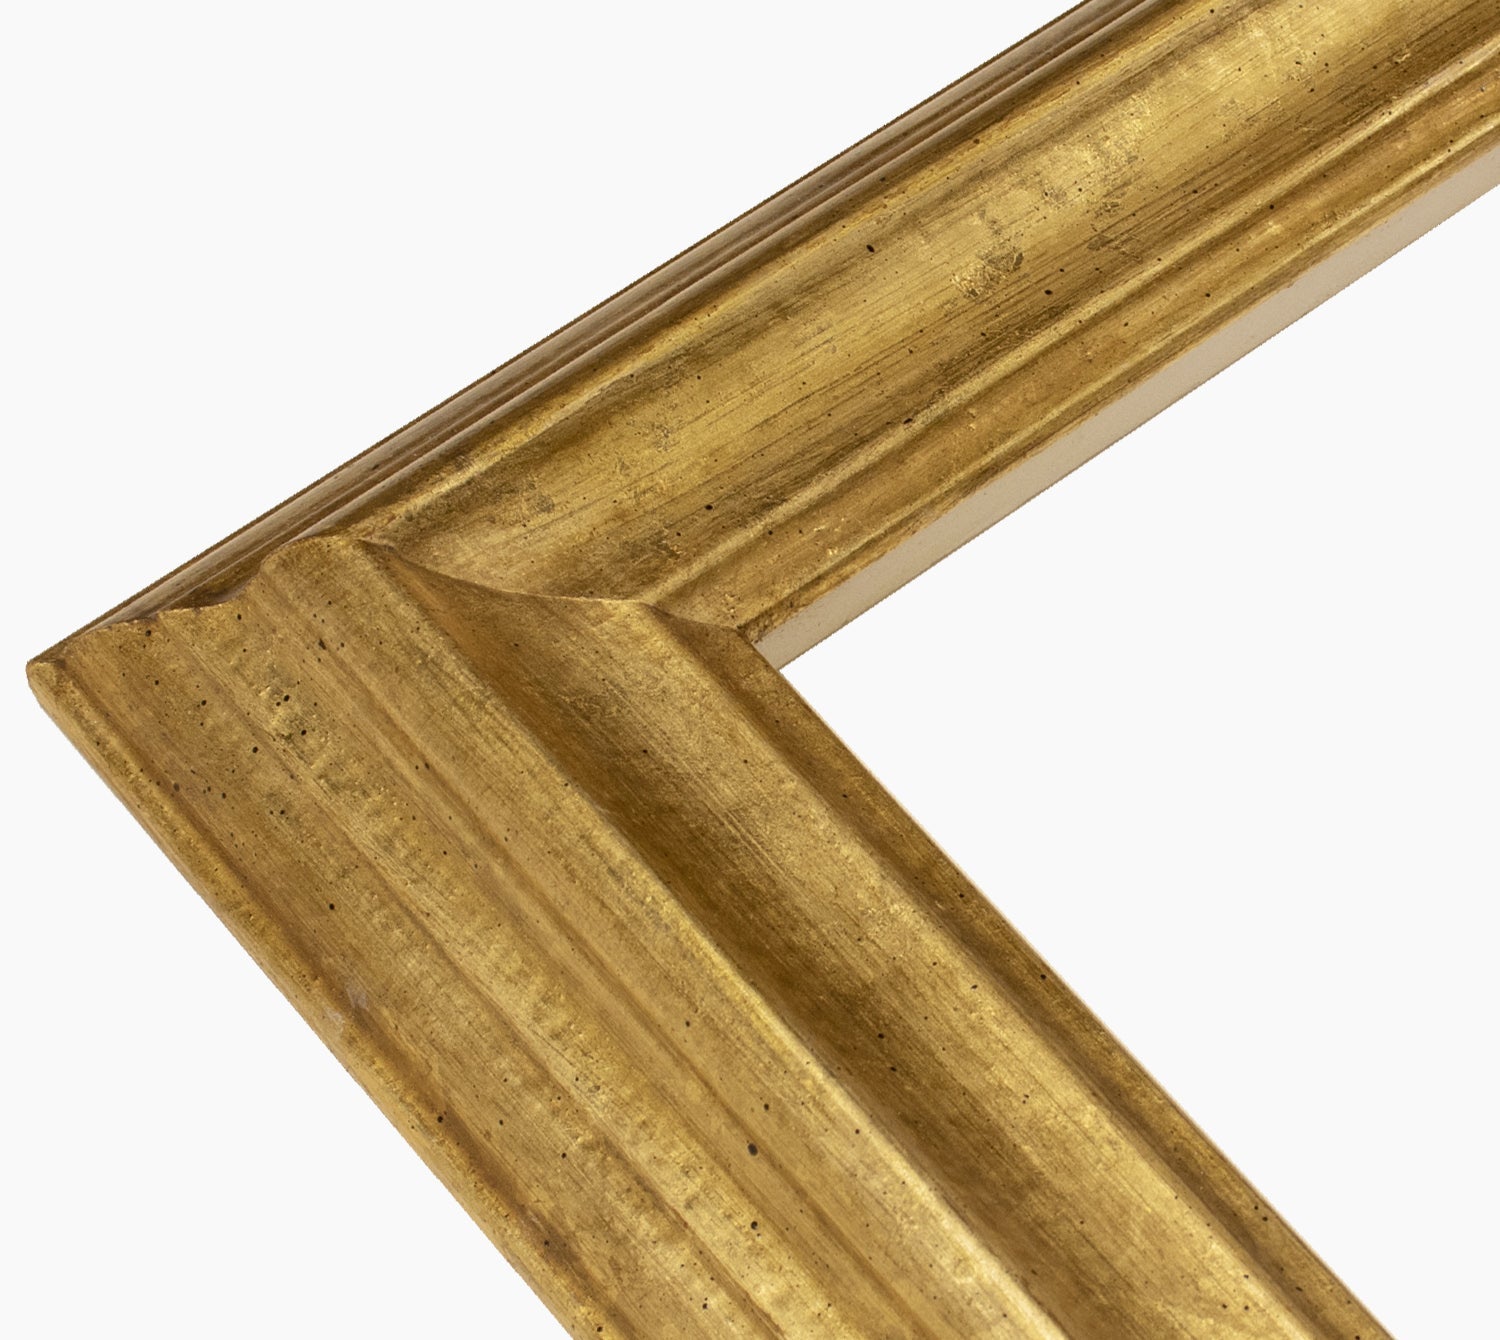 310.010 cadre en bois à la feuille d'or mesure de profil 60x40 mm Lombarda cornici S.n.c.